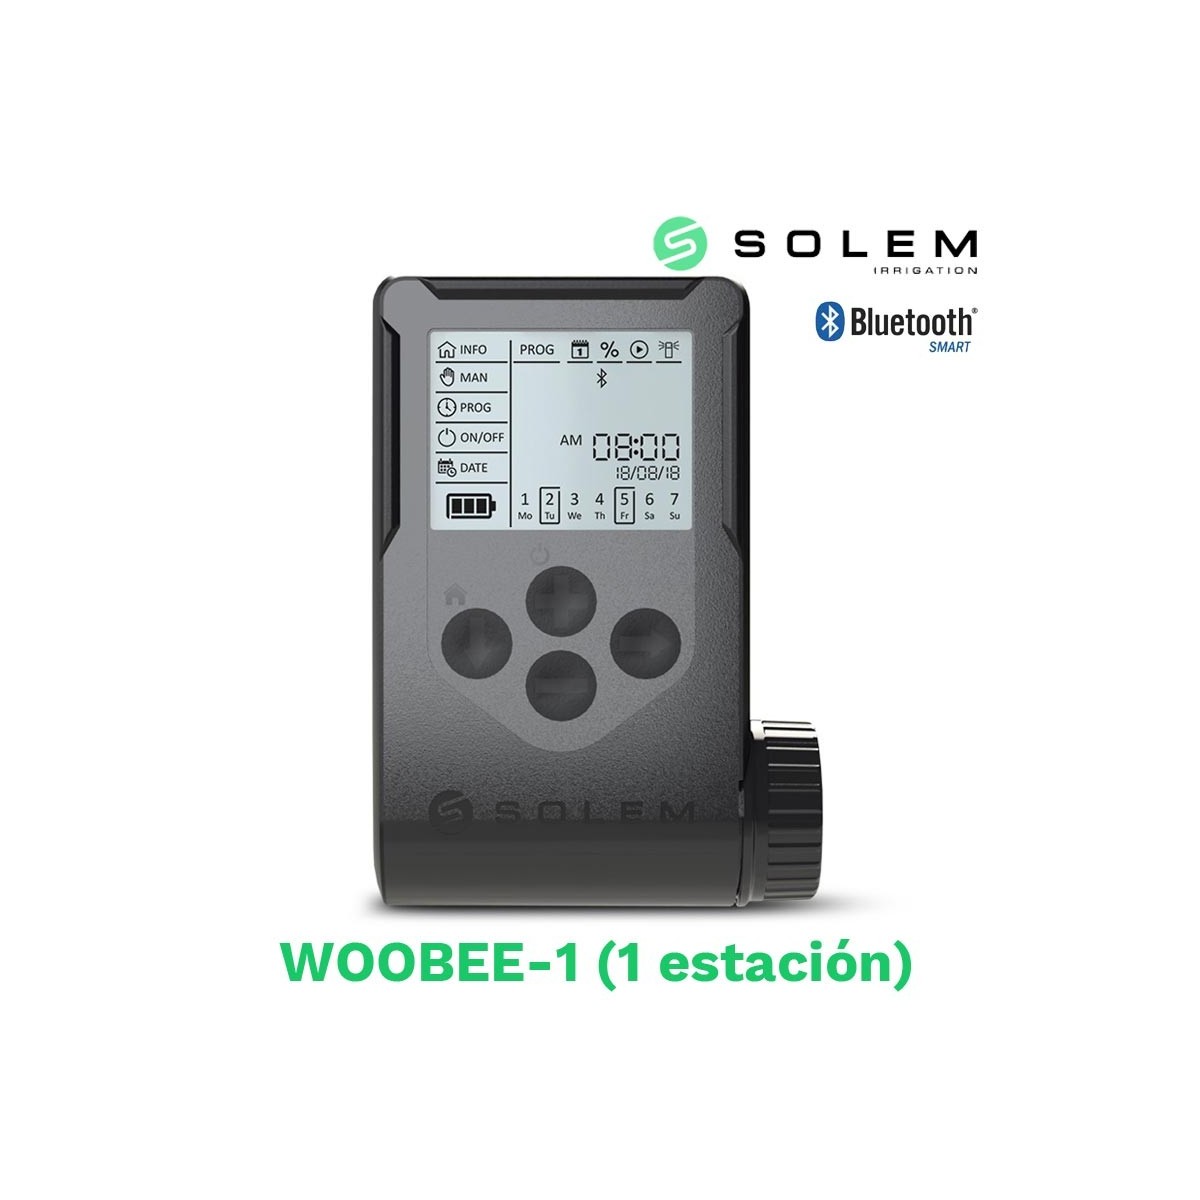 Programador solem woobee 1 estacion (bateria/pantalla/bluetooth)